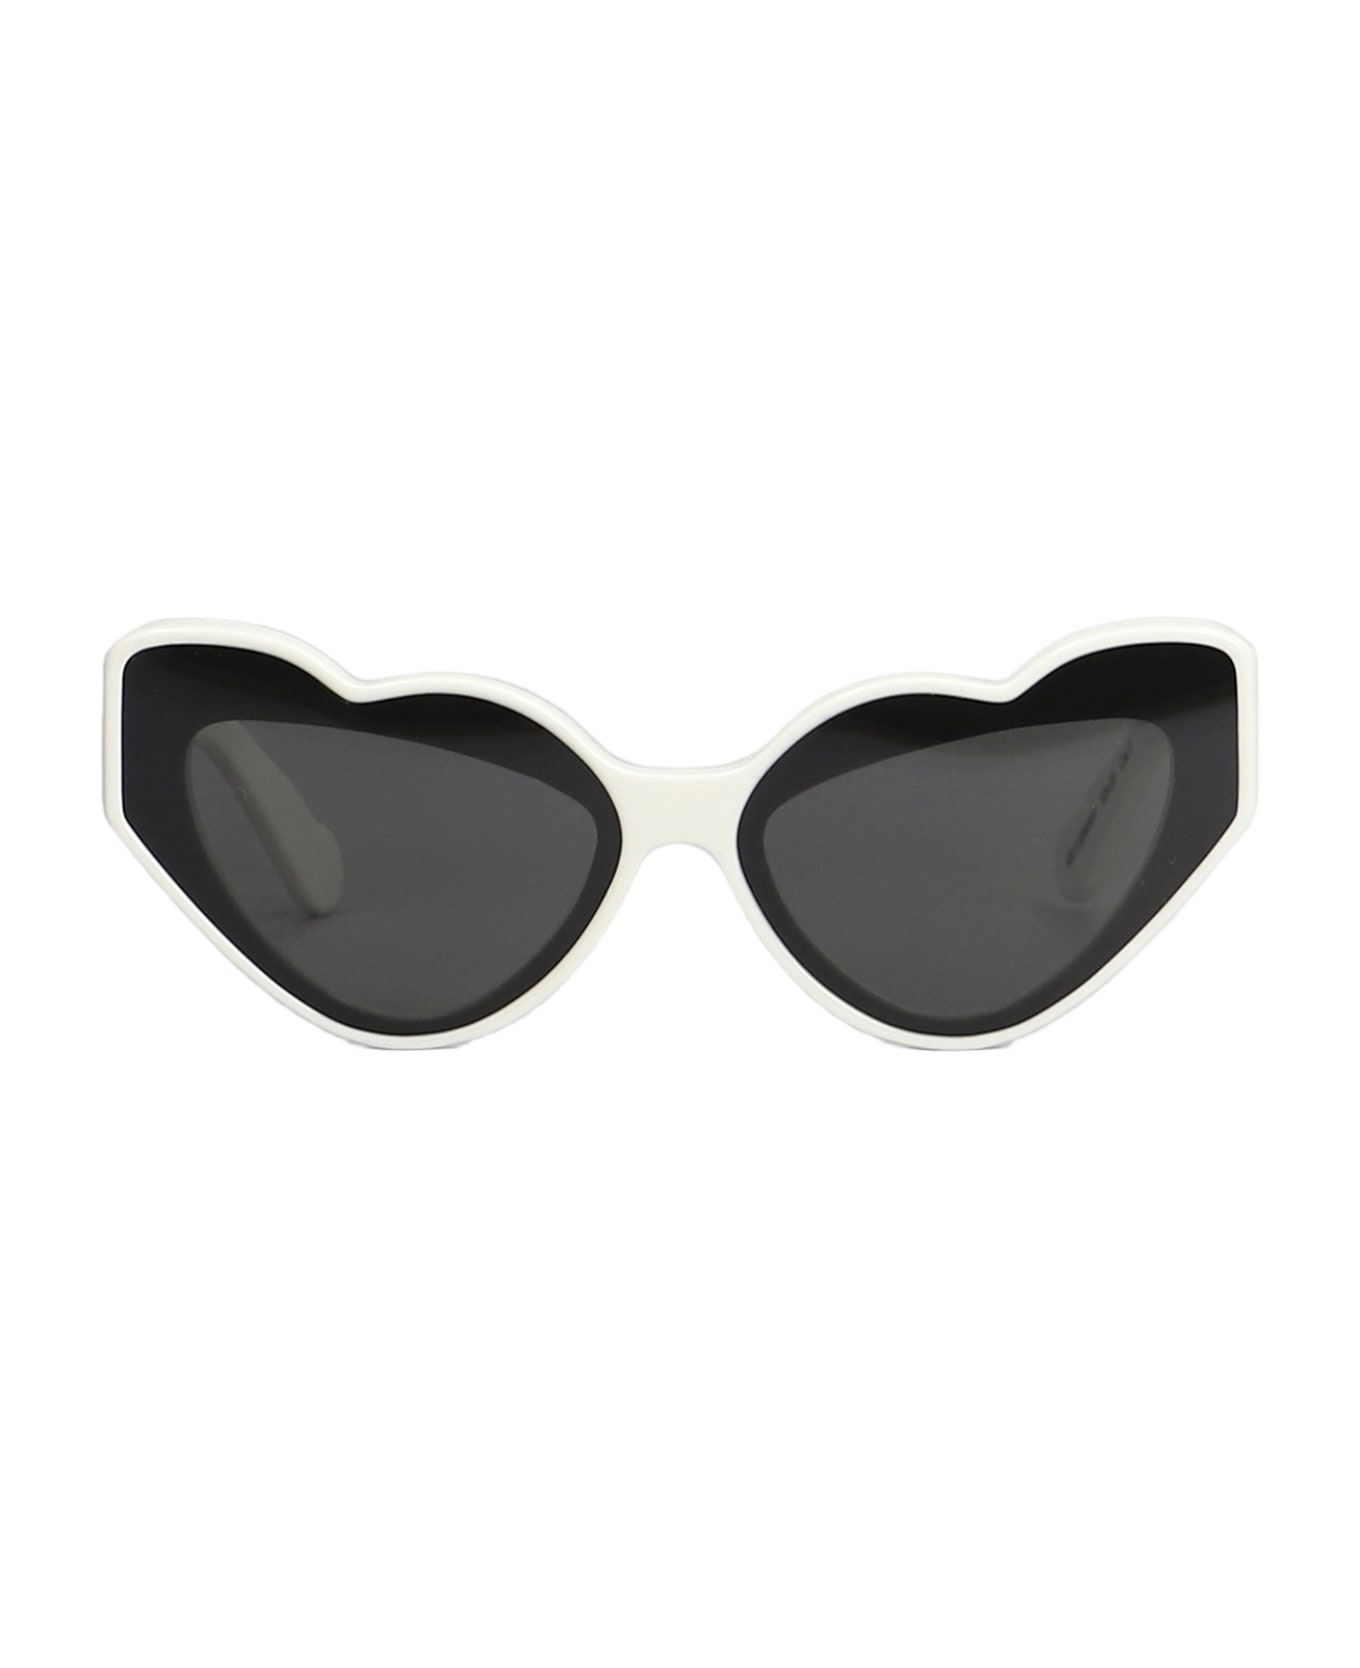 Fiorucci Sunglasses In White Acetate - Bianco